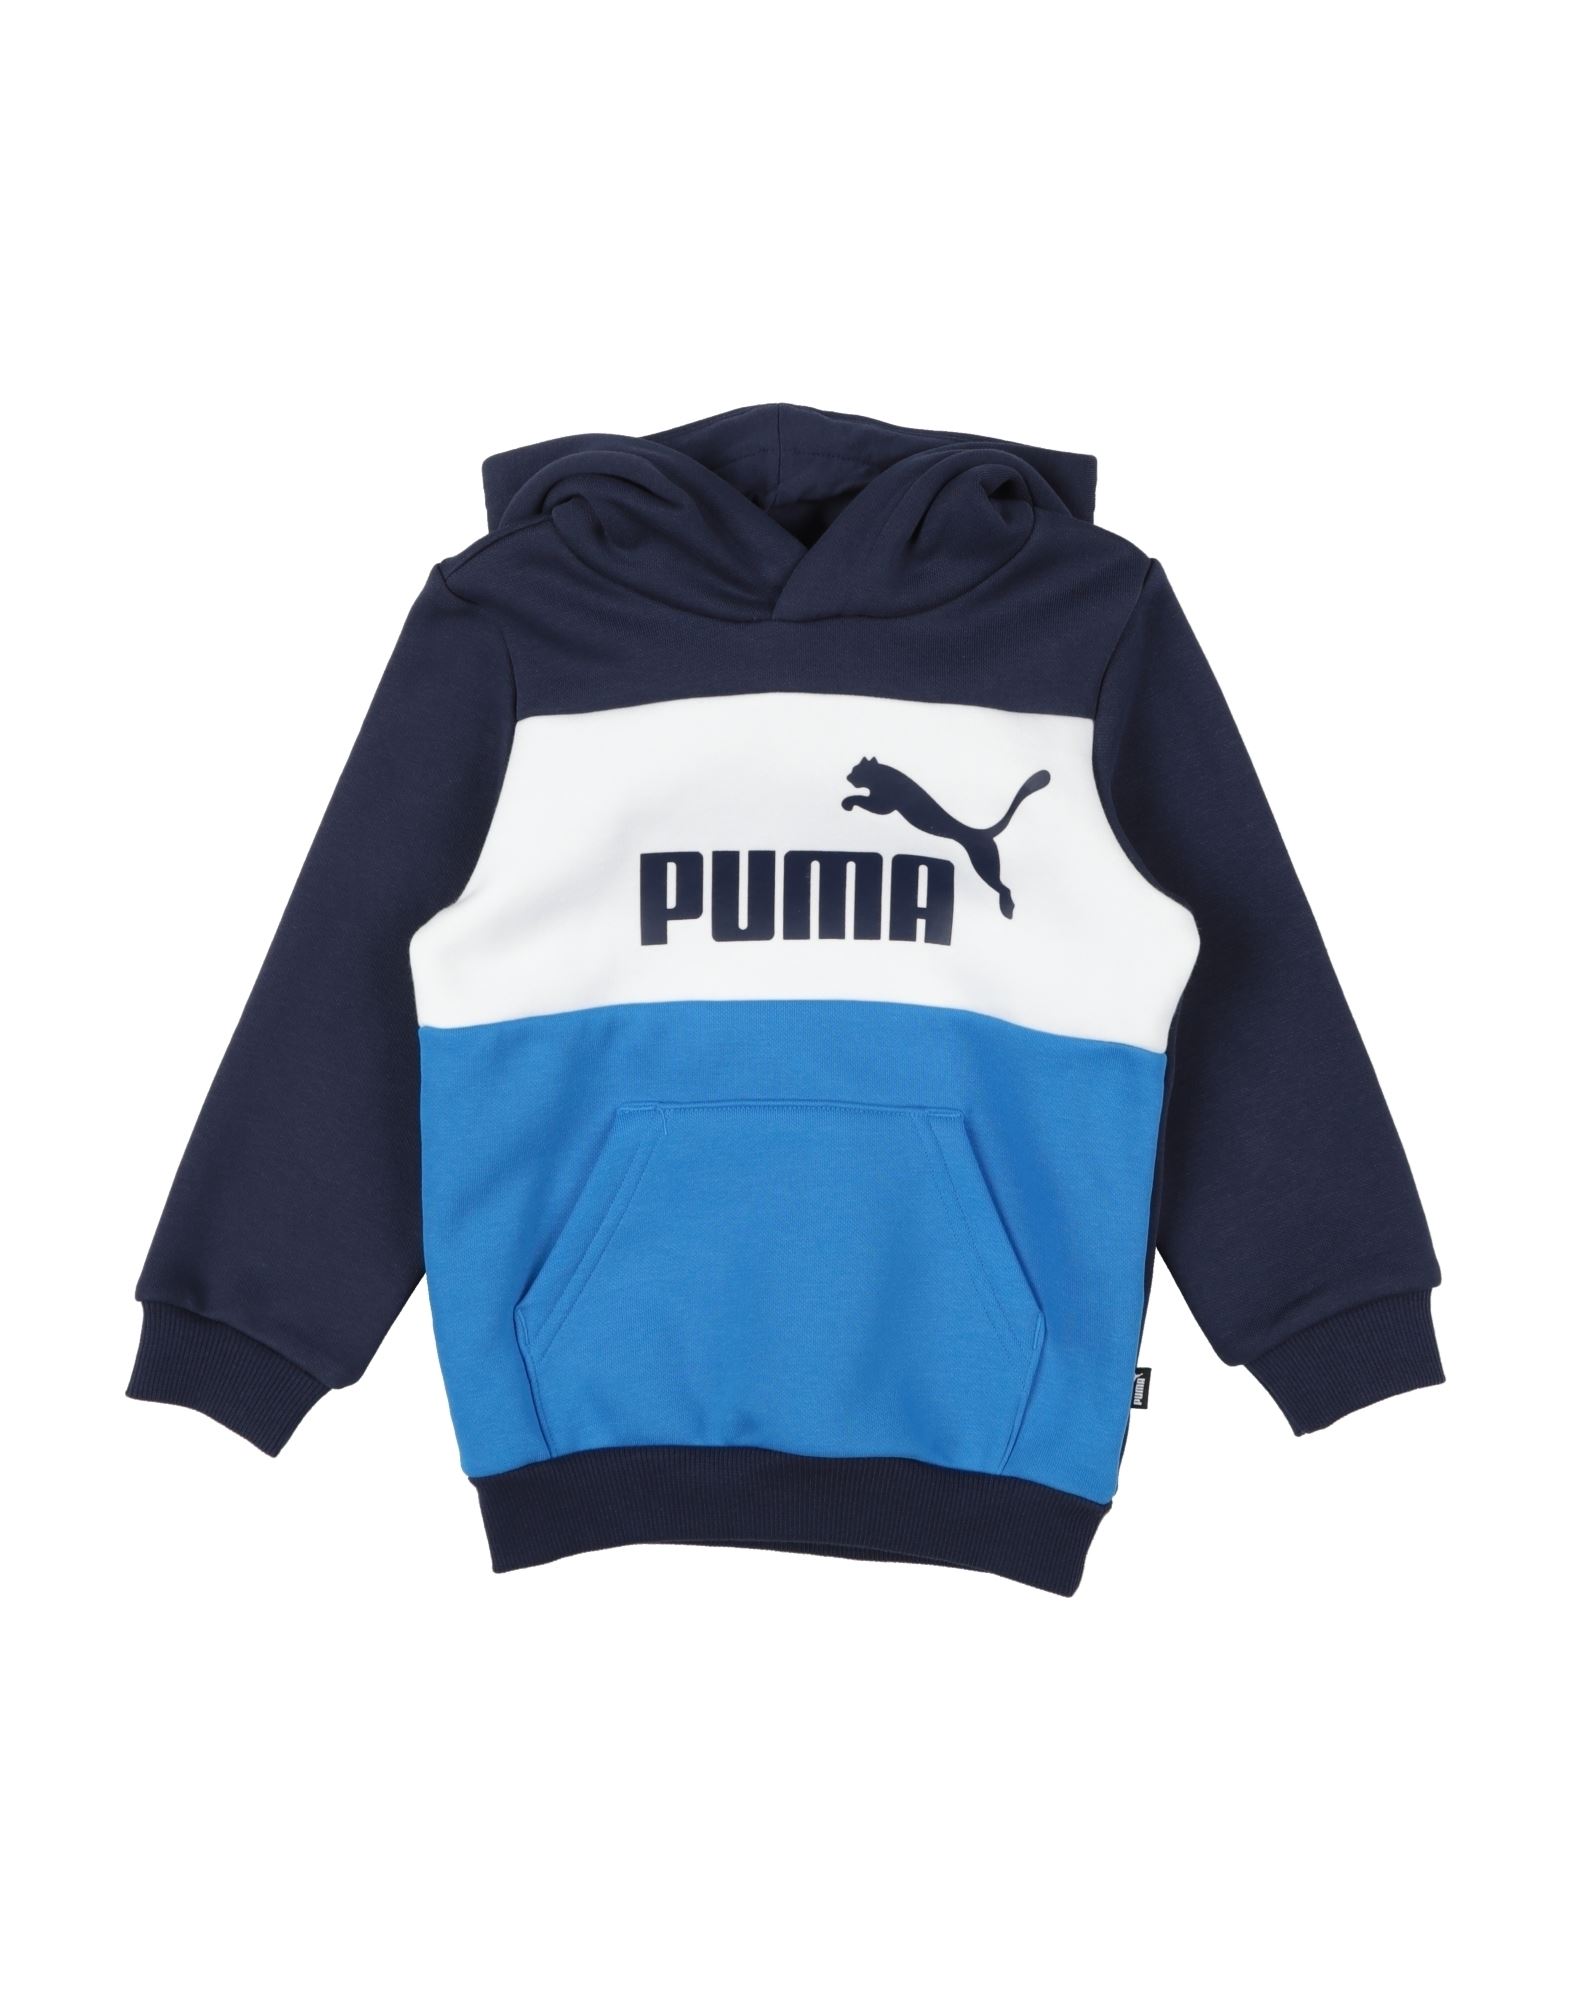 PUMA Sweatshirt Kinder Azurblau von PUMA